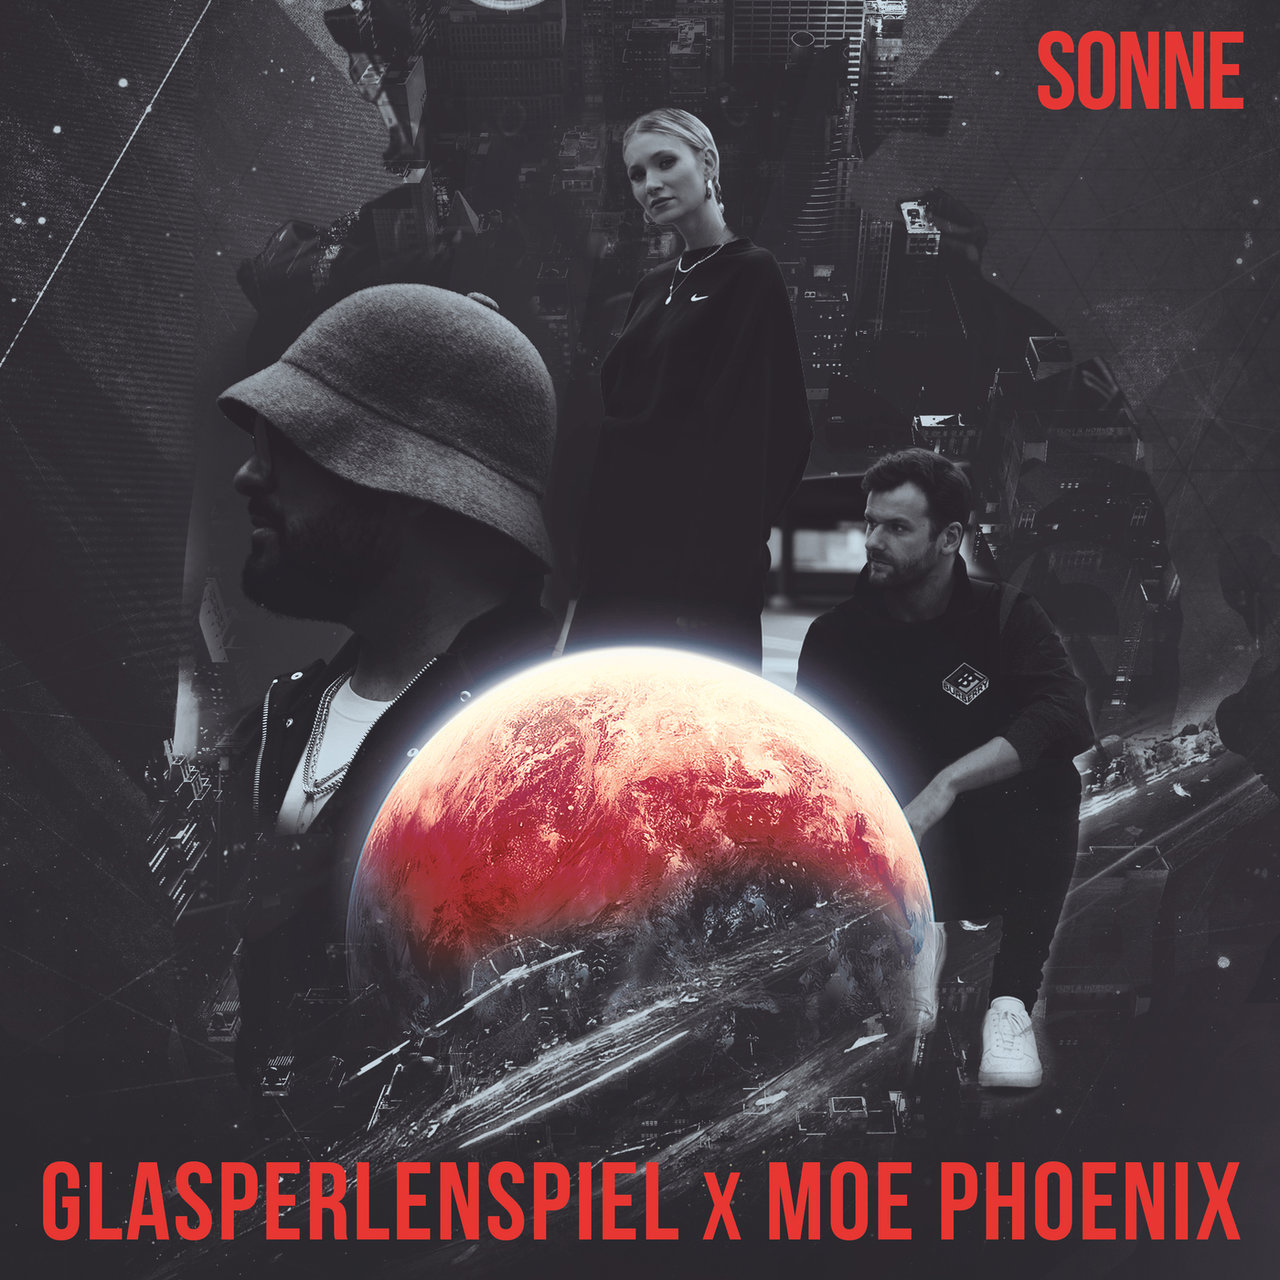 Glasperlenspiel & Moe Phoenix Sonne cover artwork